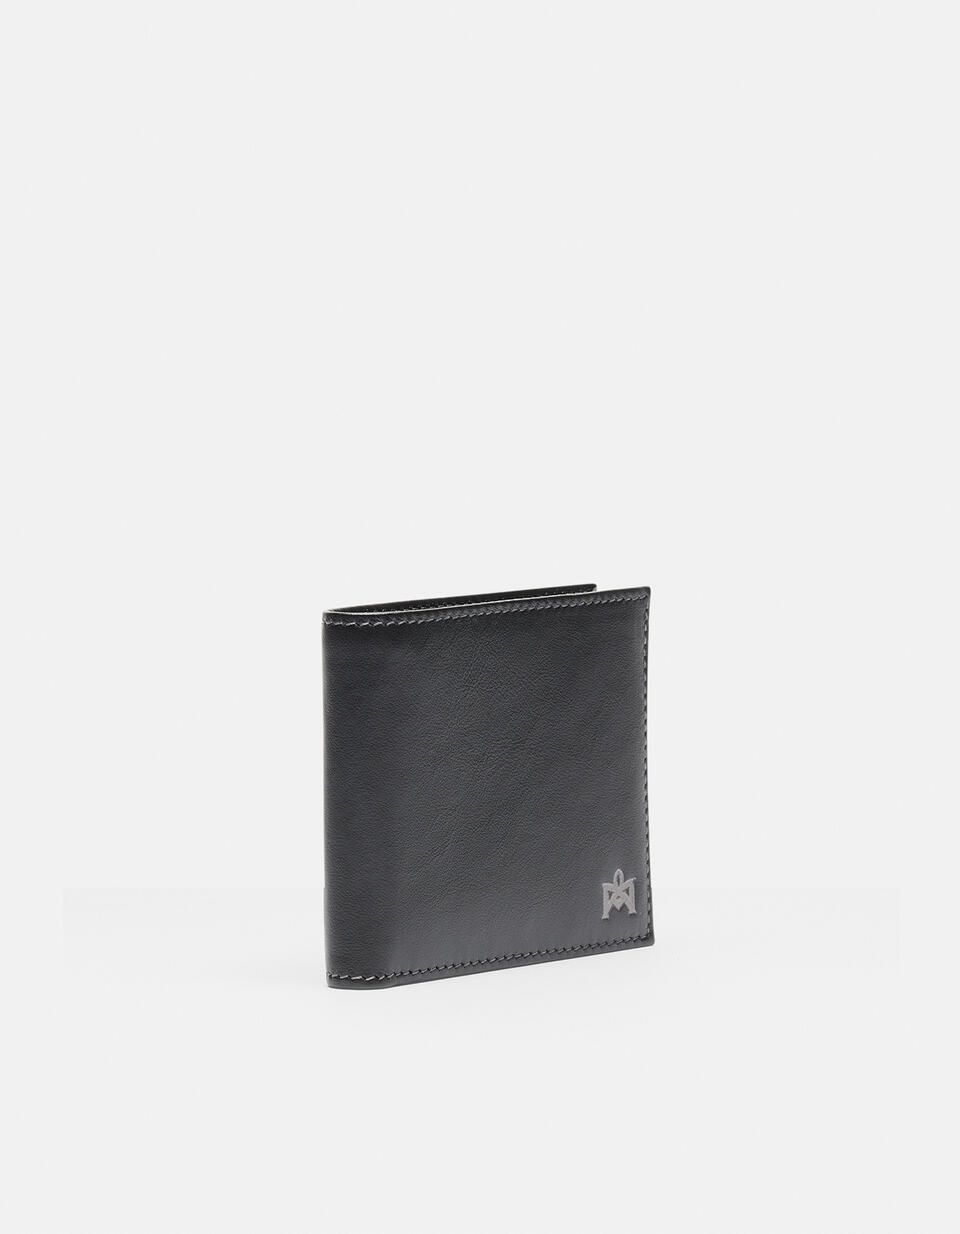 Adam  basic wallet - Women's Wallets - Men's Wallets | Wallets NEROBORDEAUX - Women's Wallets - Men's Wallets | WalletsCuoieria Fiorentina